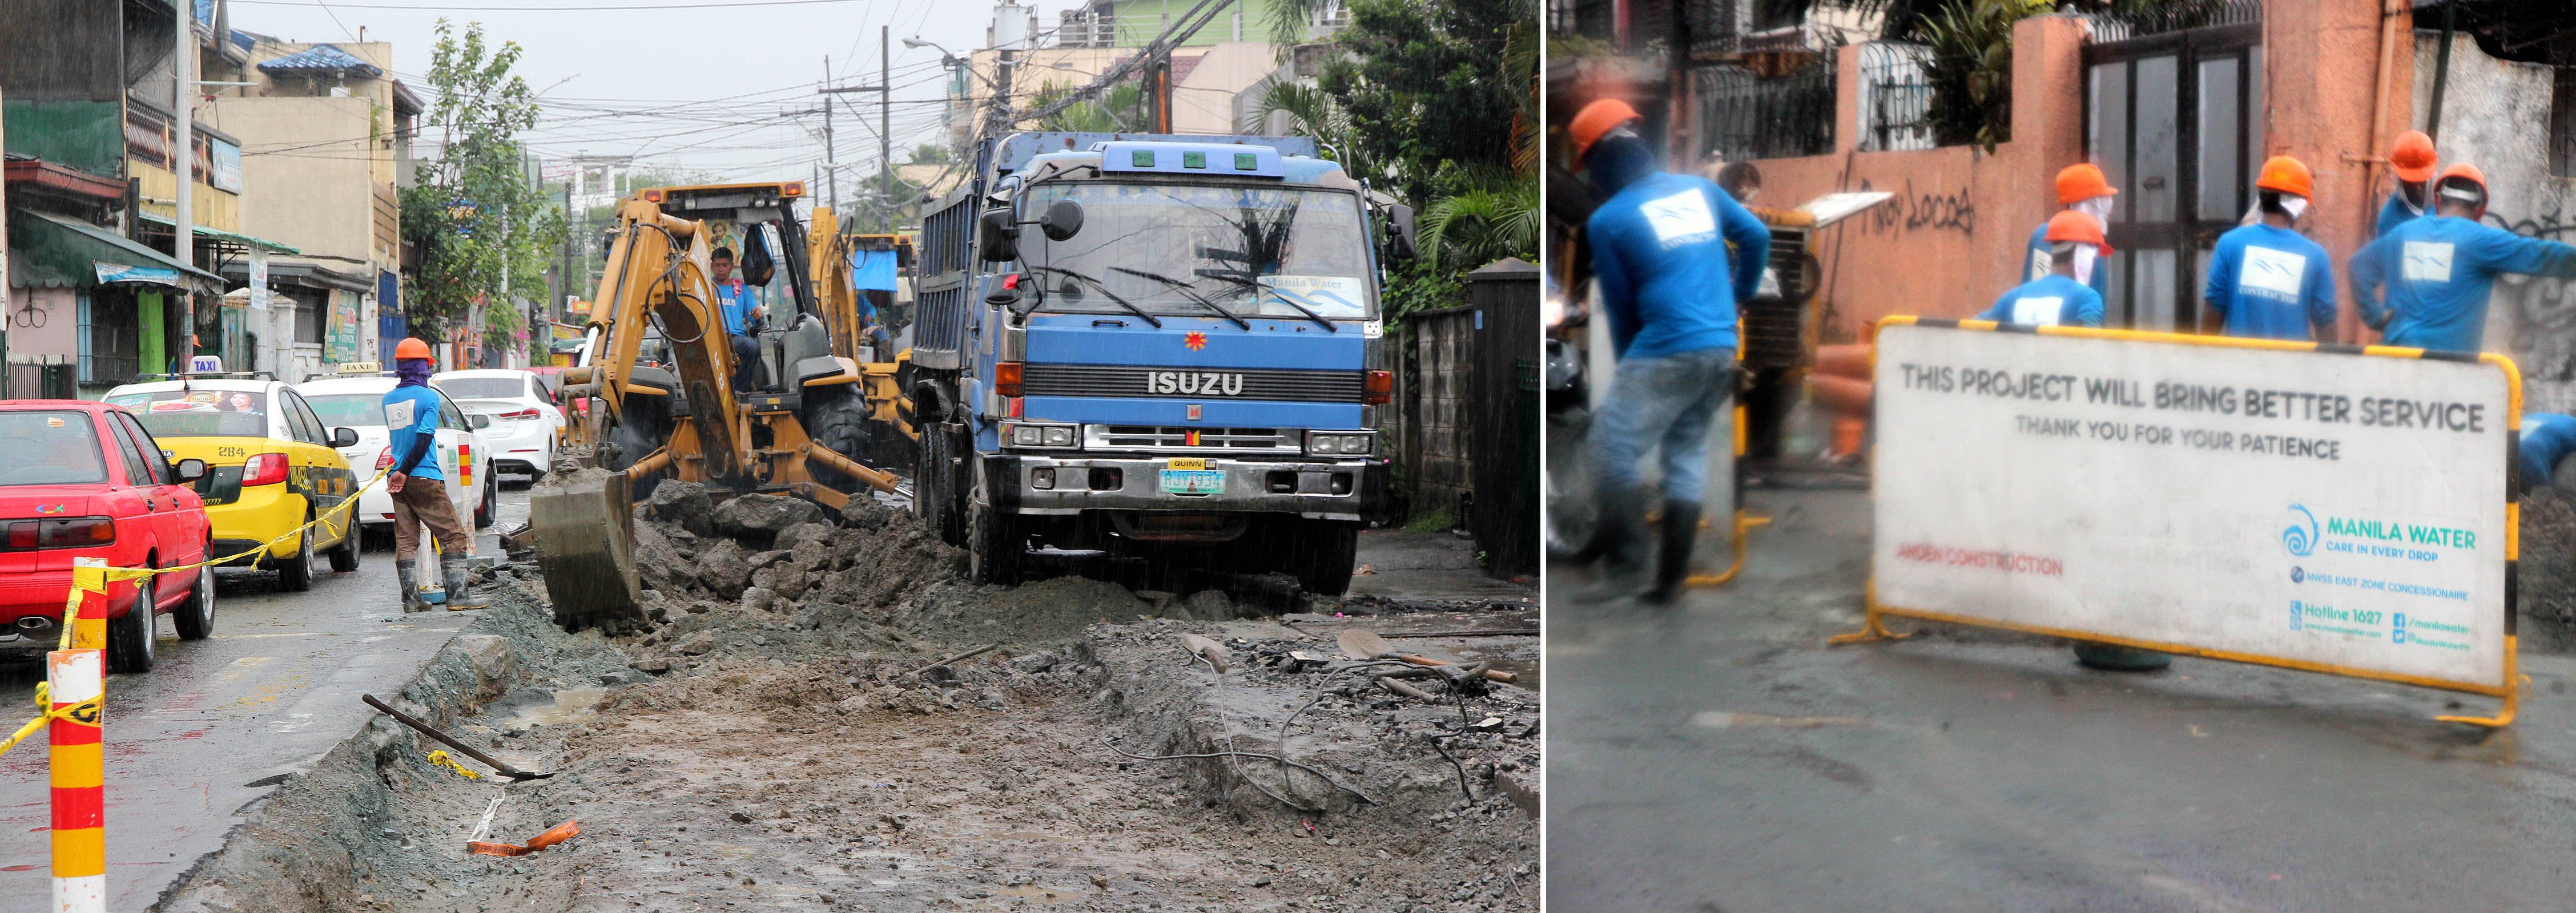 Manila Water excavation along Road 1, Project 6, Quezon City